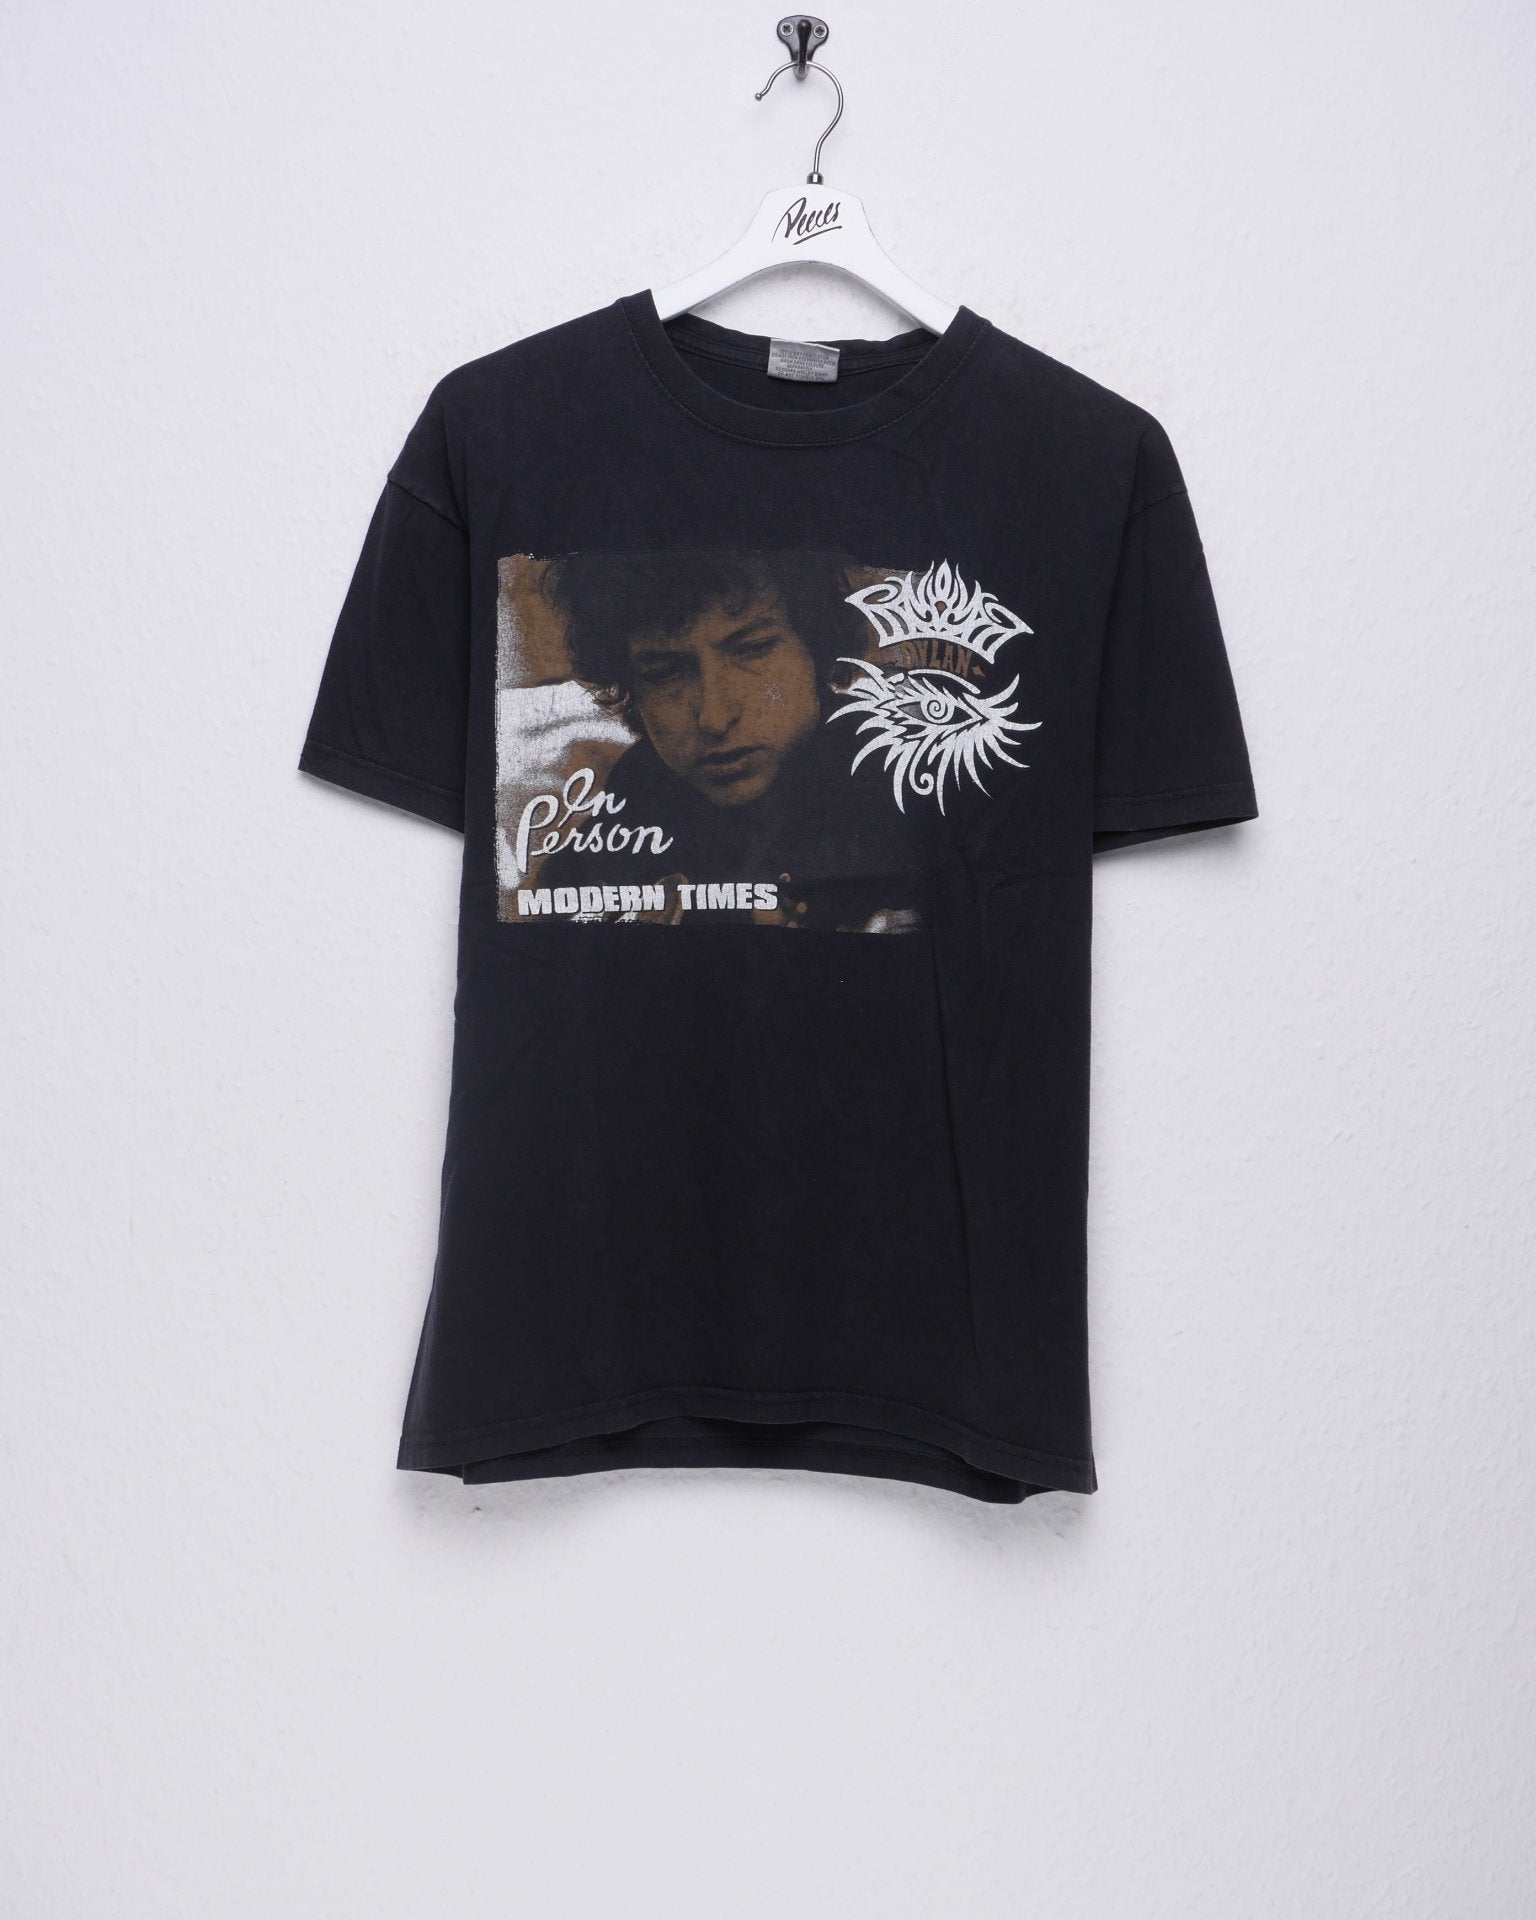 Bob Dylan printed Graphic Vintage Shirt - Peeces